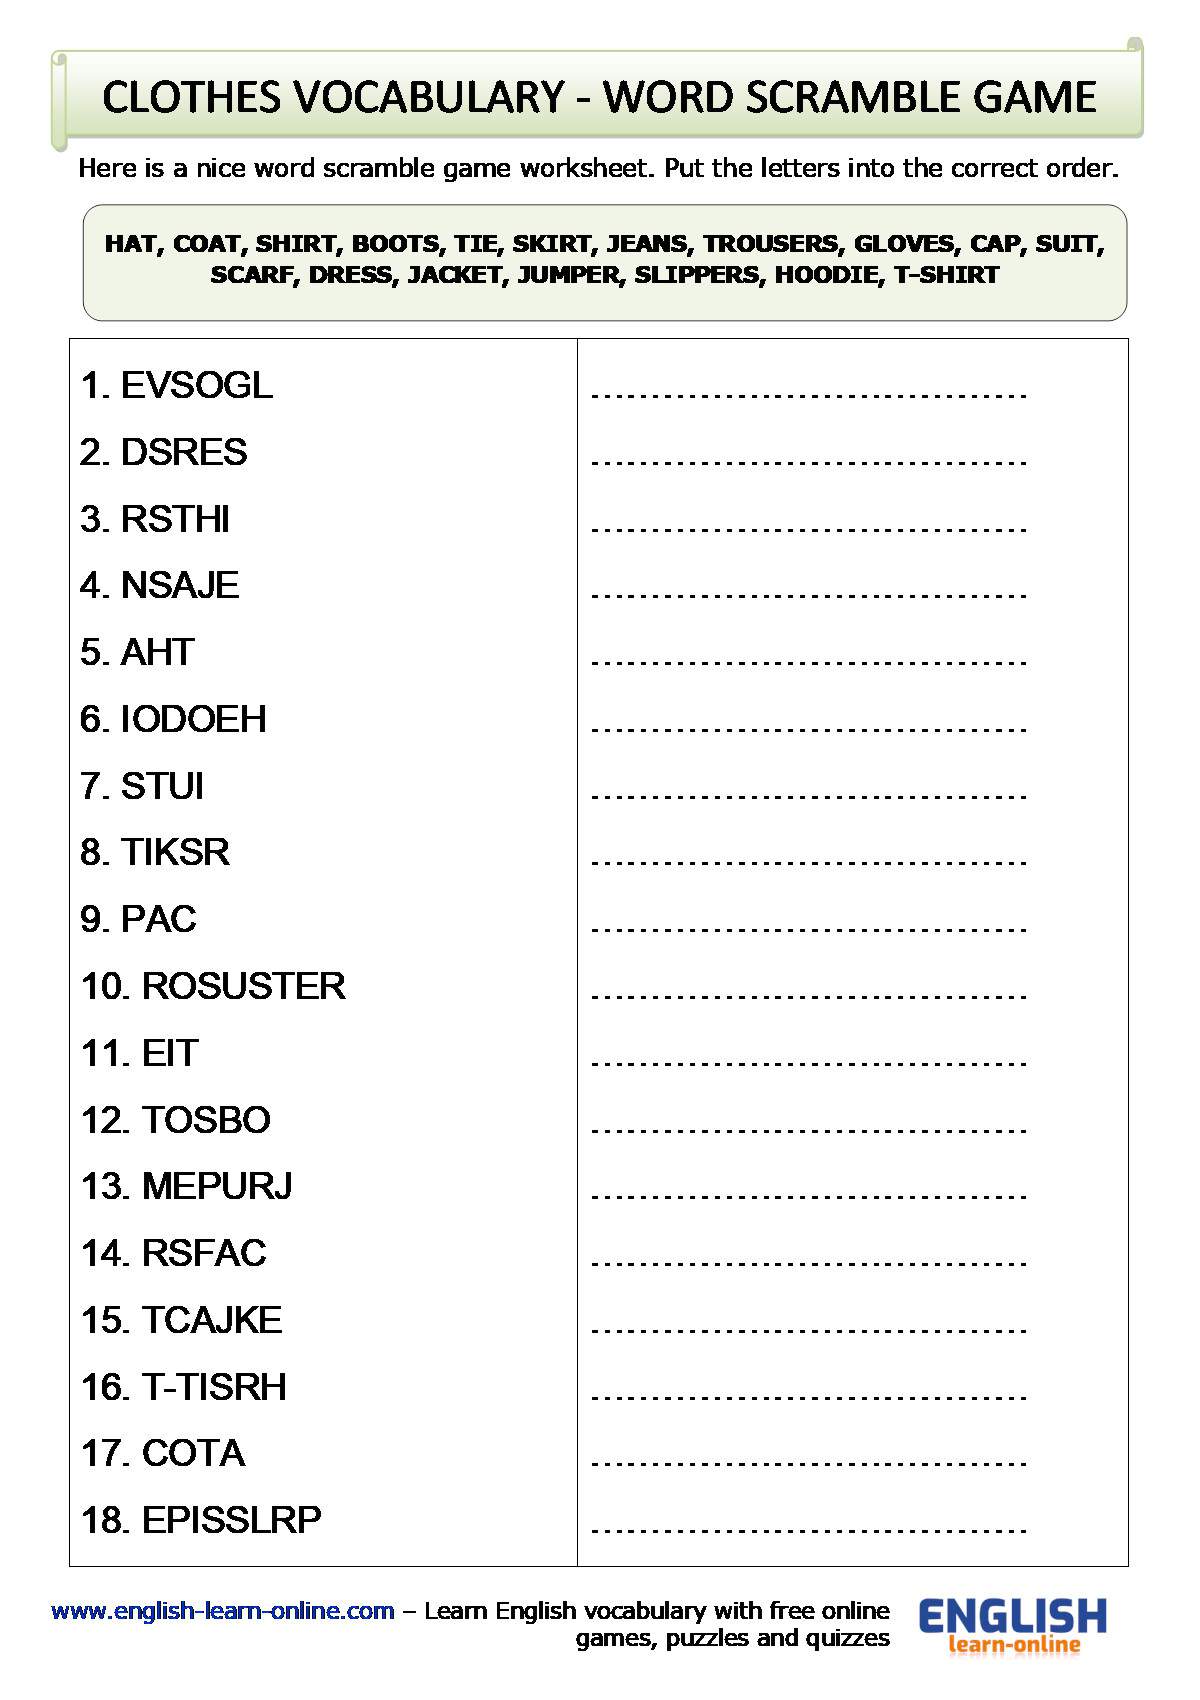 English vocabulary : 100 Clothing items Vocabulary with sentence